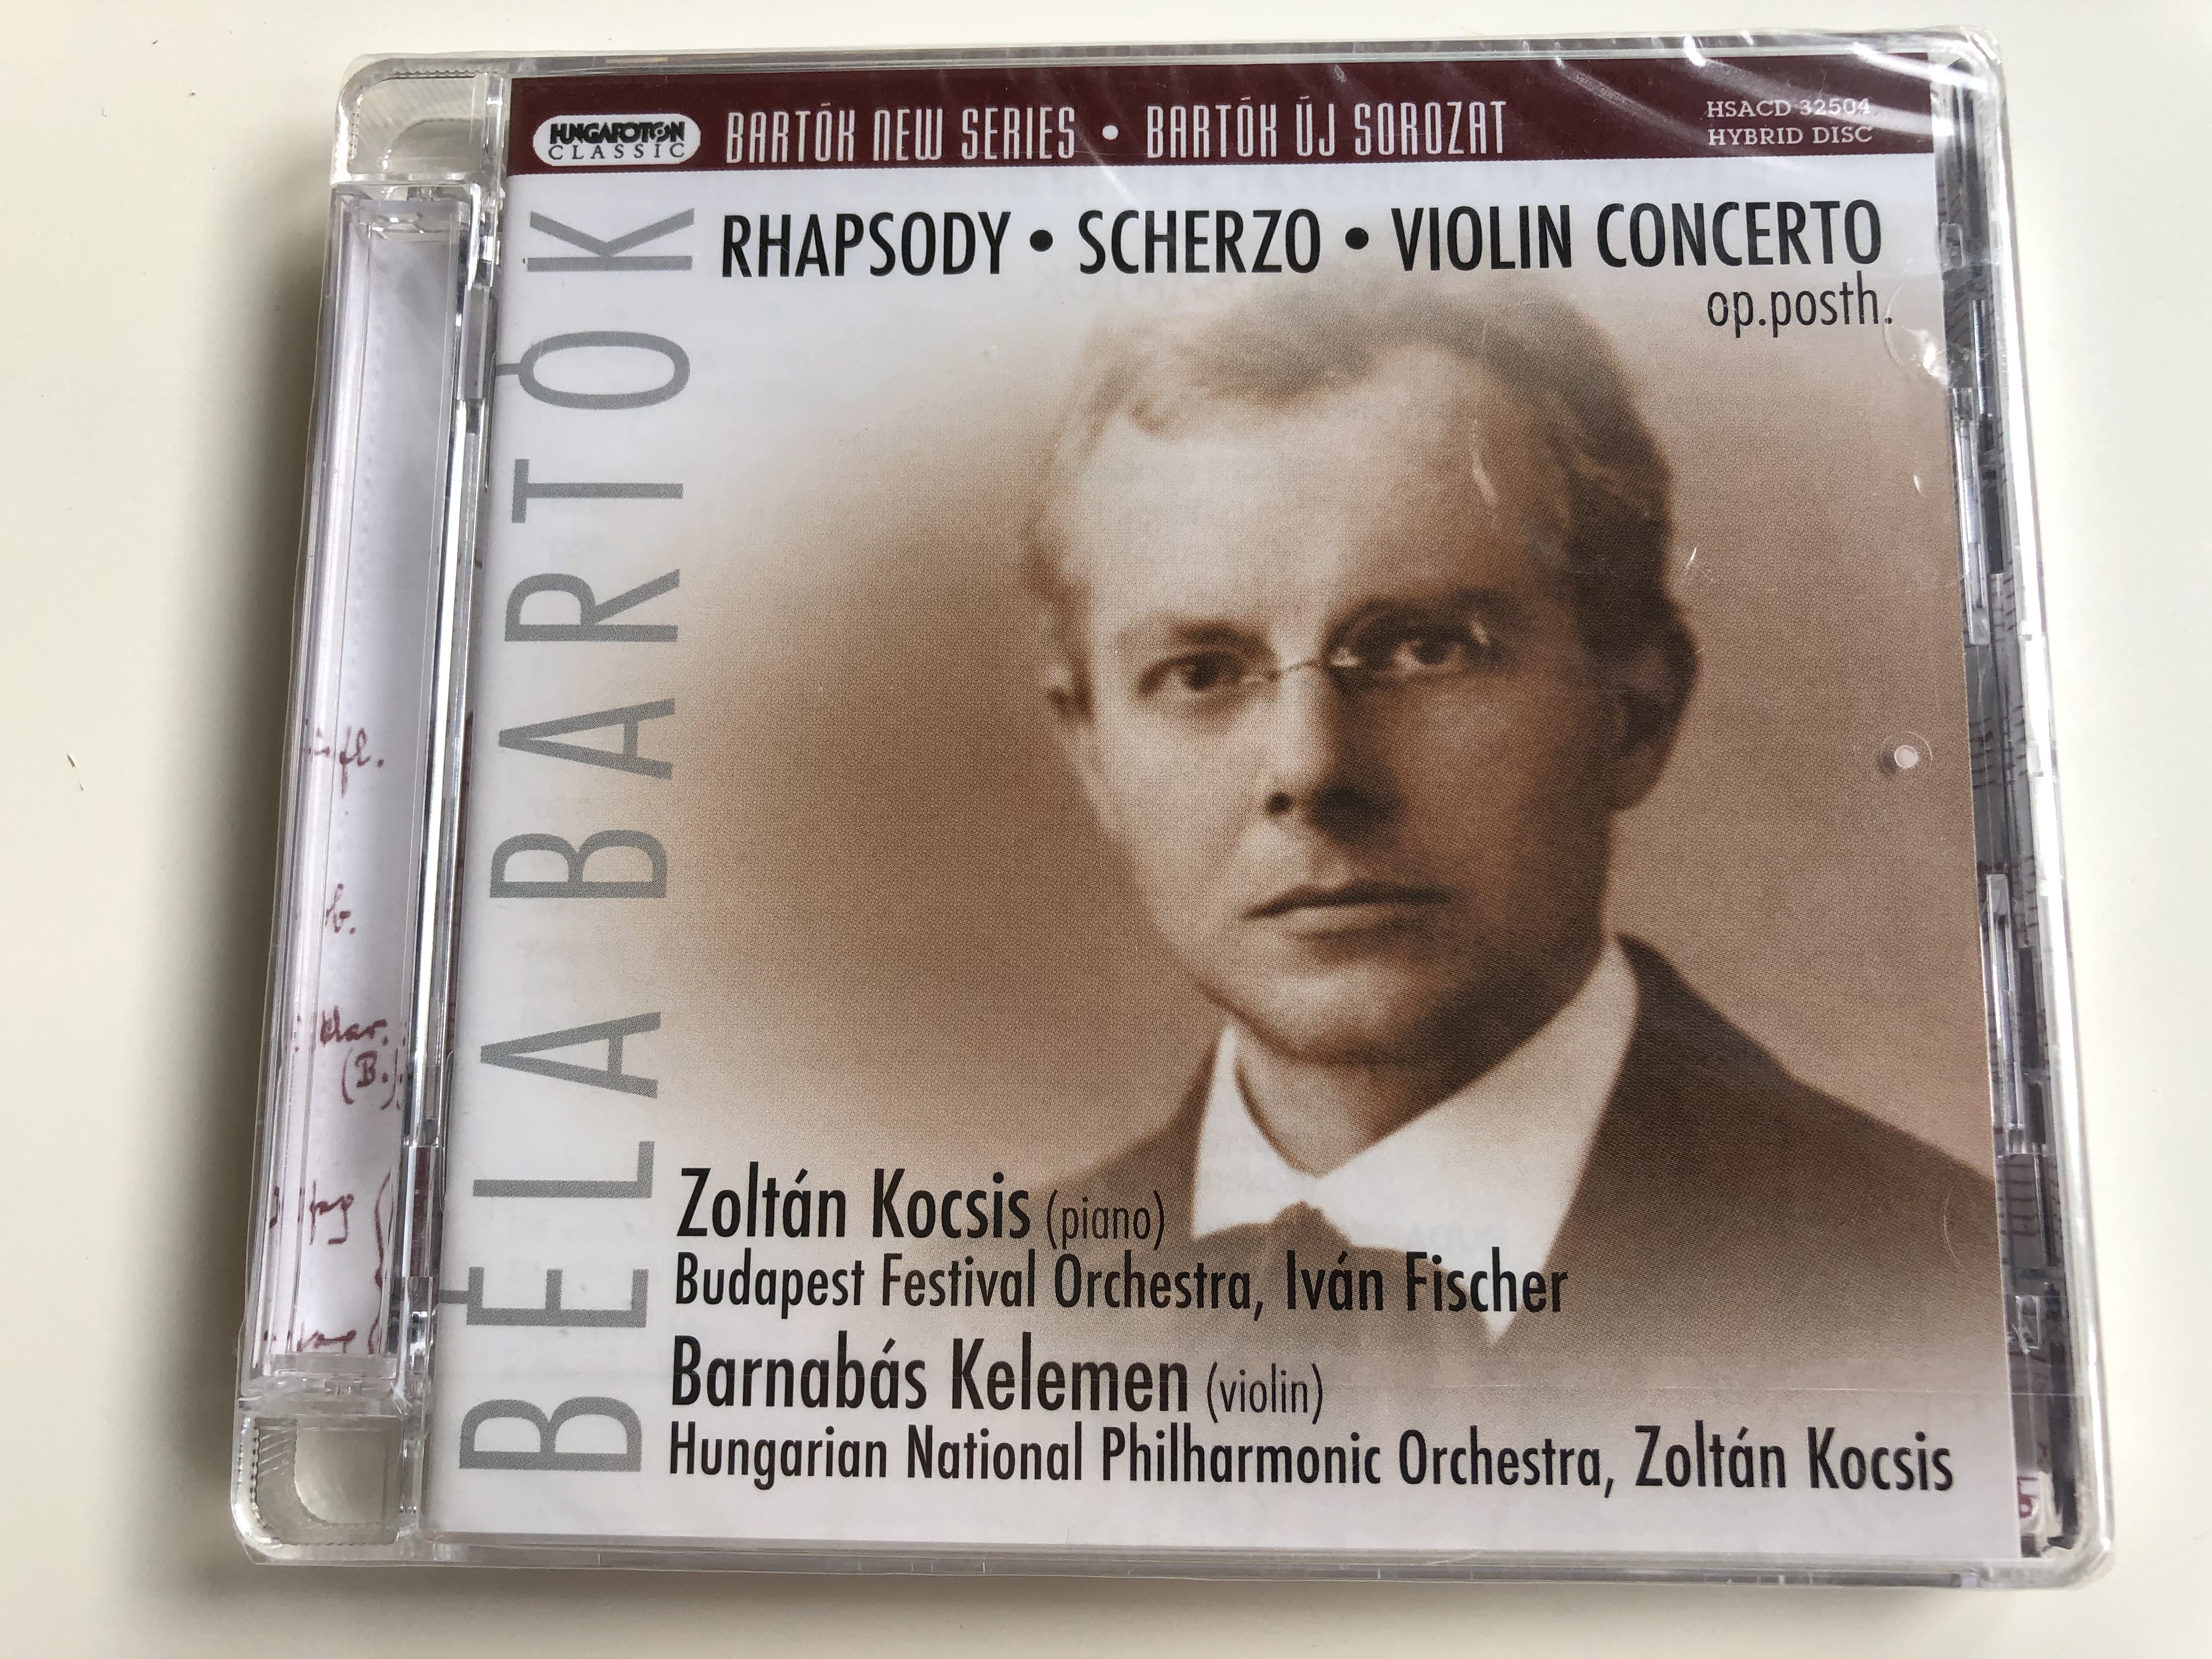 bart-k-new-series-rhapsody-scherzo-violin-concerto-op.-posth.-zoltan-kocsis-piano-budapest-festival-orchestra-ivan-fischer-barnabas-kelemen-violin-hungaroton-classic-audio-cd-2007-ster-1-.jpg